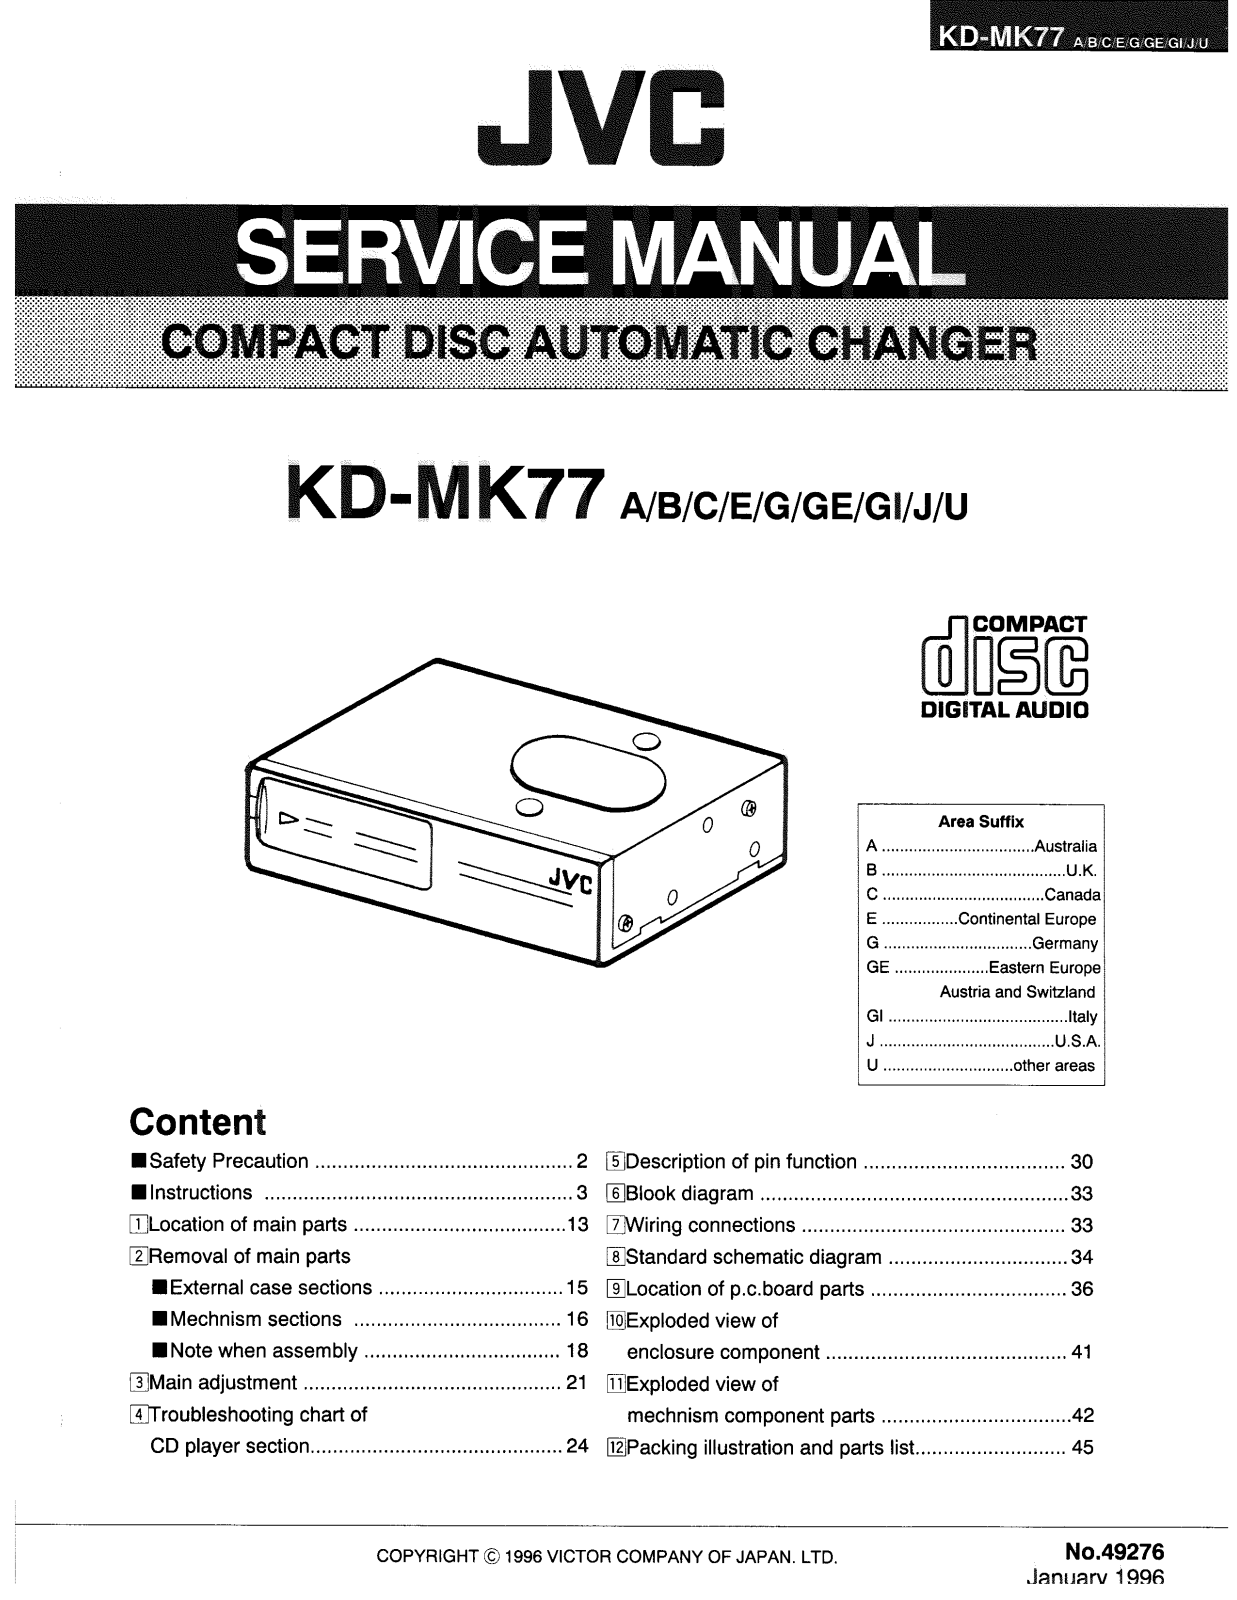 JVC KD-MK77A, KD-MK77B, KD-MK77C, KD-MK77E, KD-MK77G Service Manual